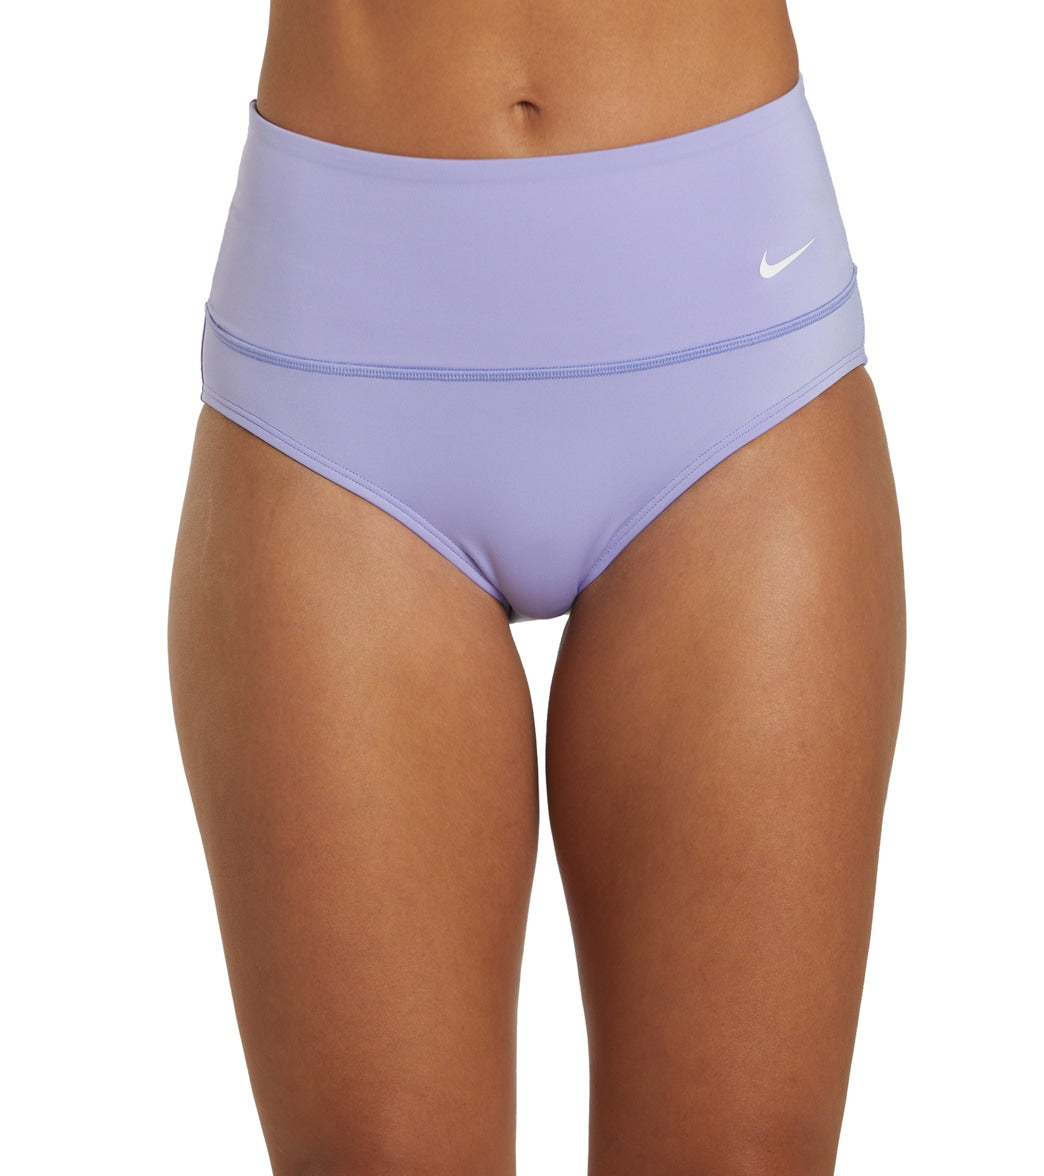 Nike Women's Essential High Waist Bikini Bottom at